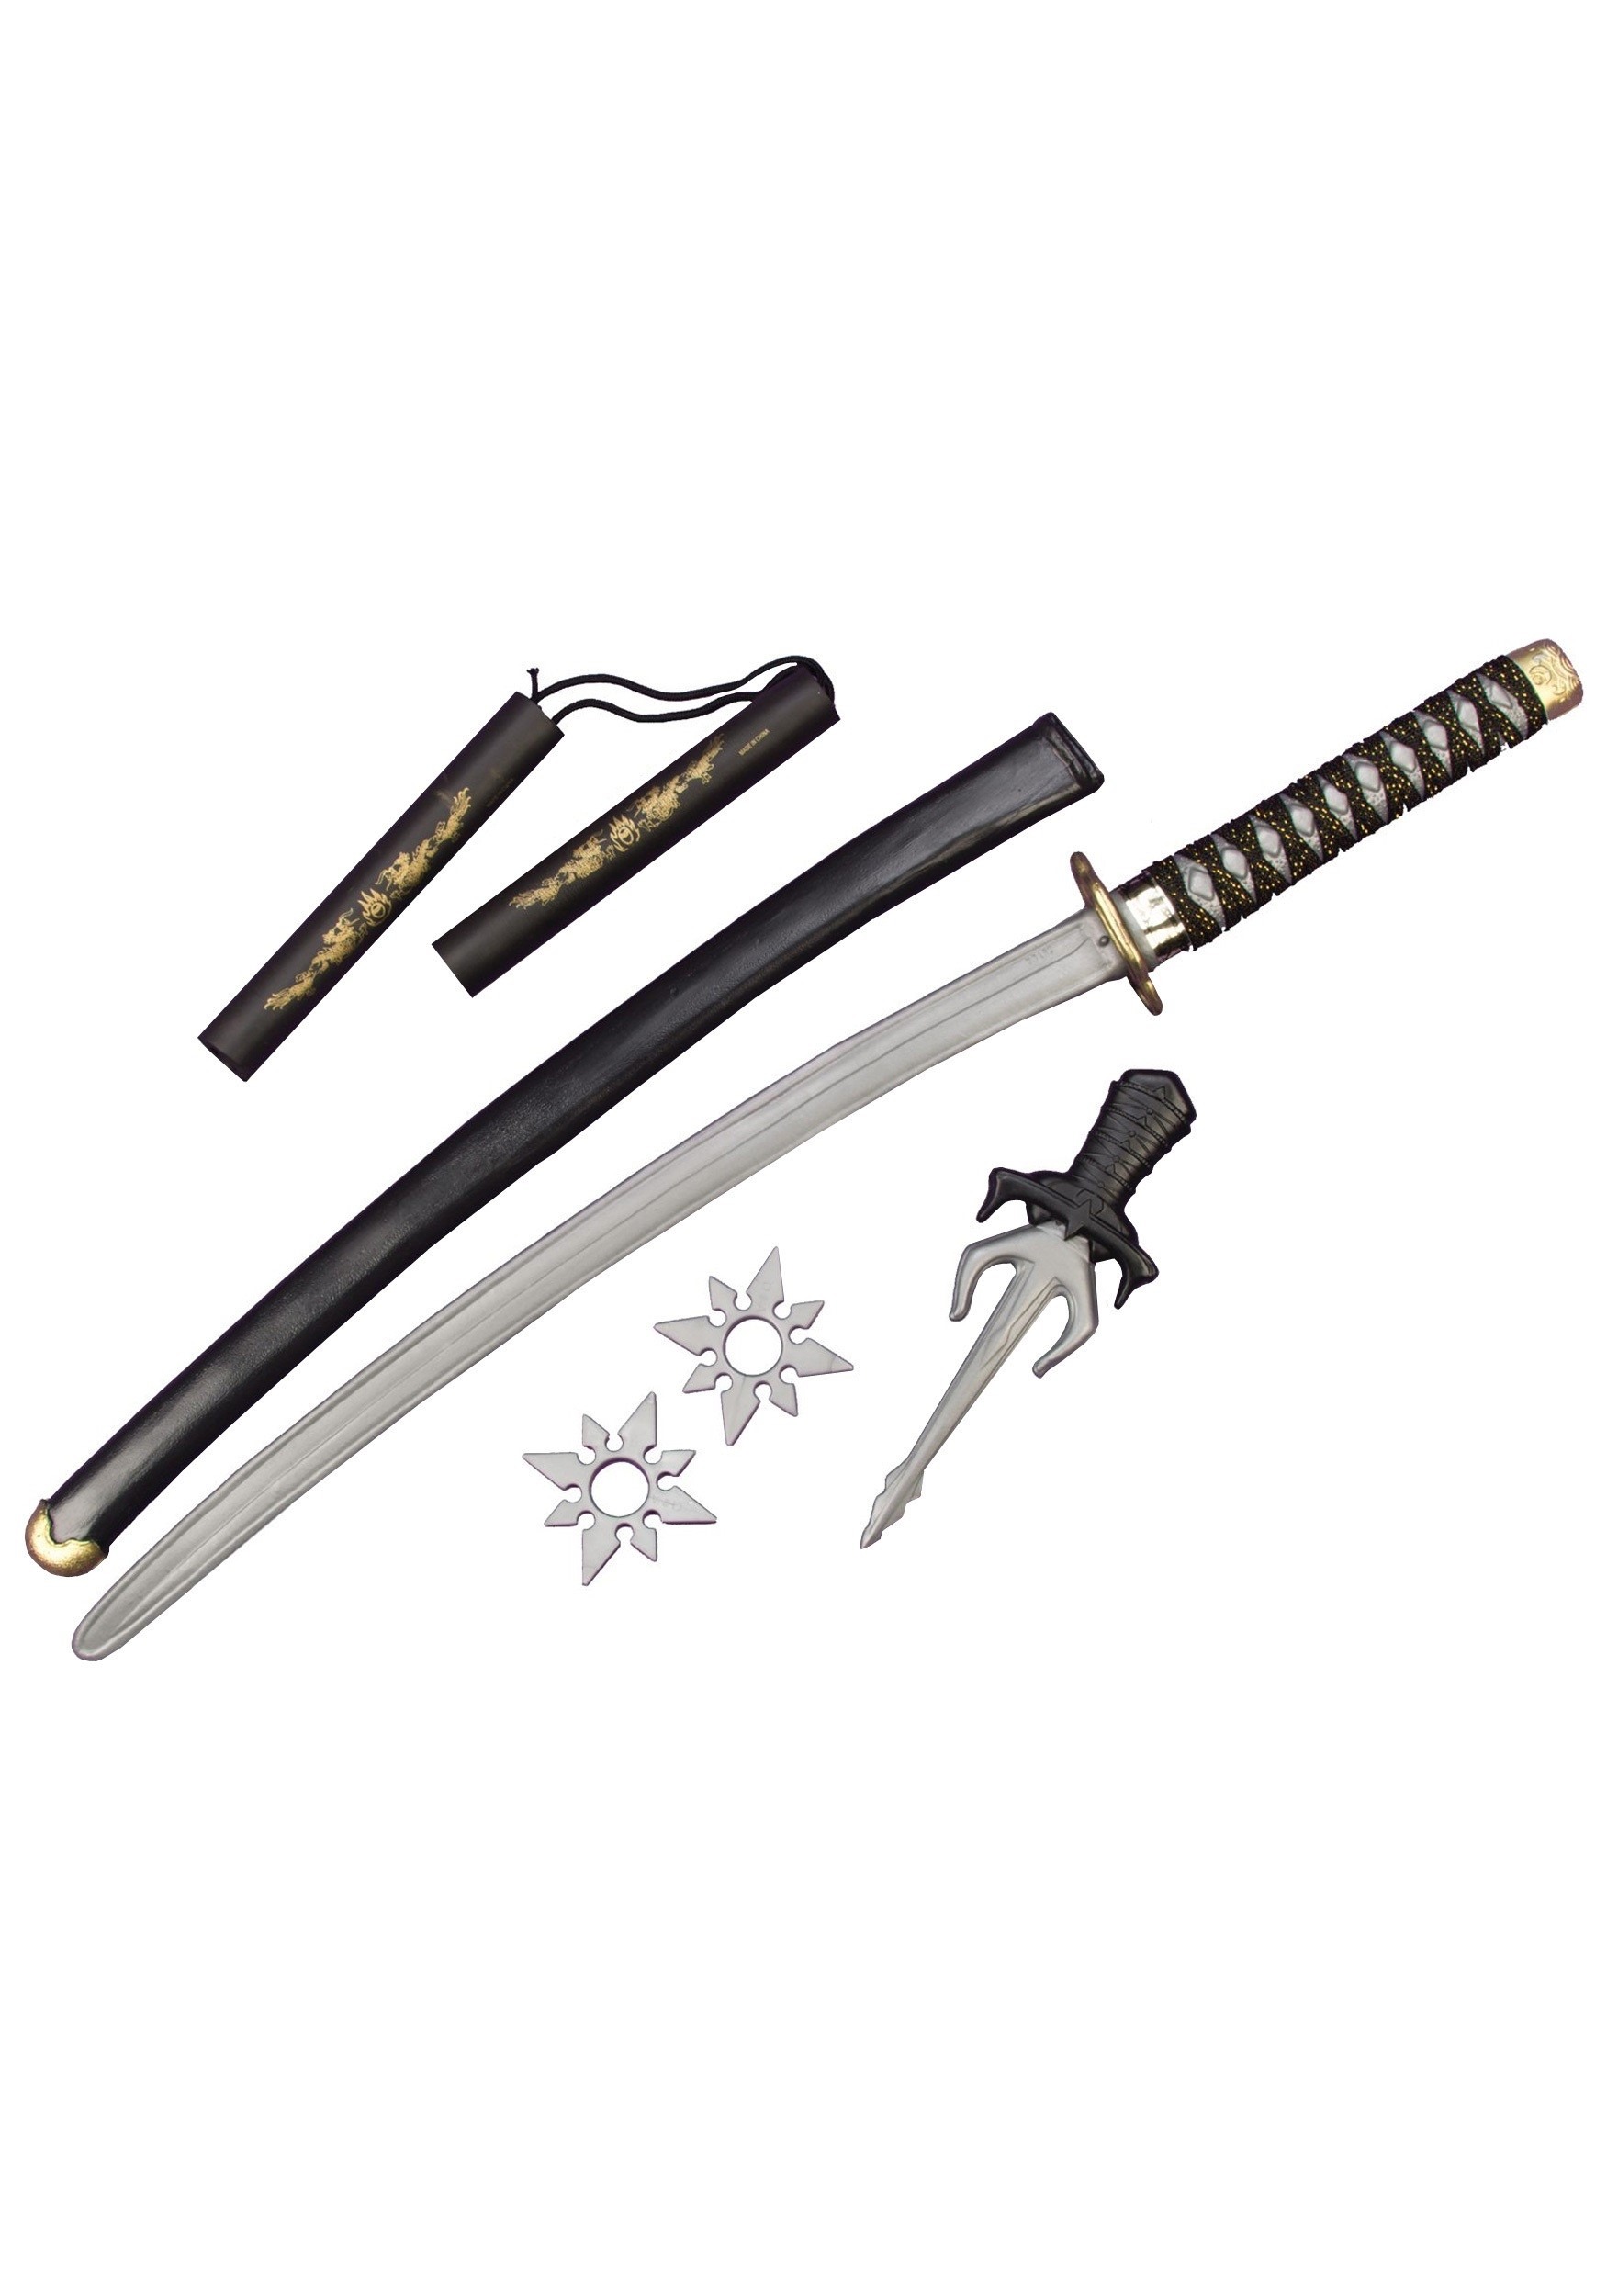 https://images.halloweencostumes.com/products/4640/1-1/ninja-weapon-kit-update-main.jpg